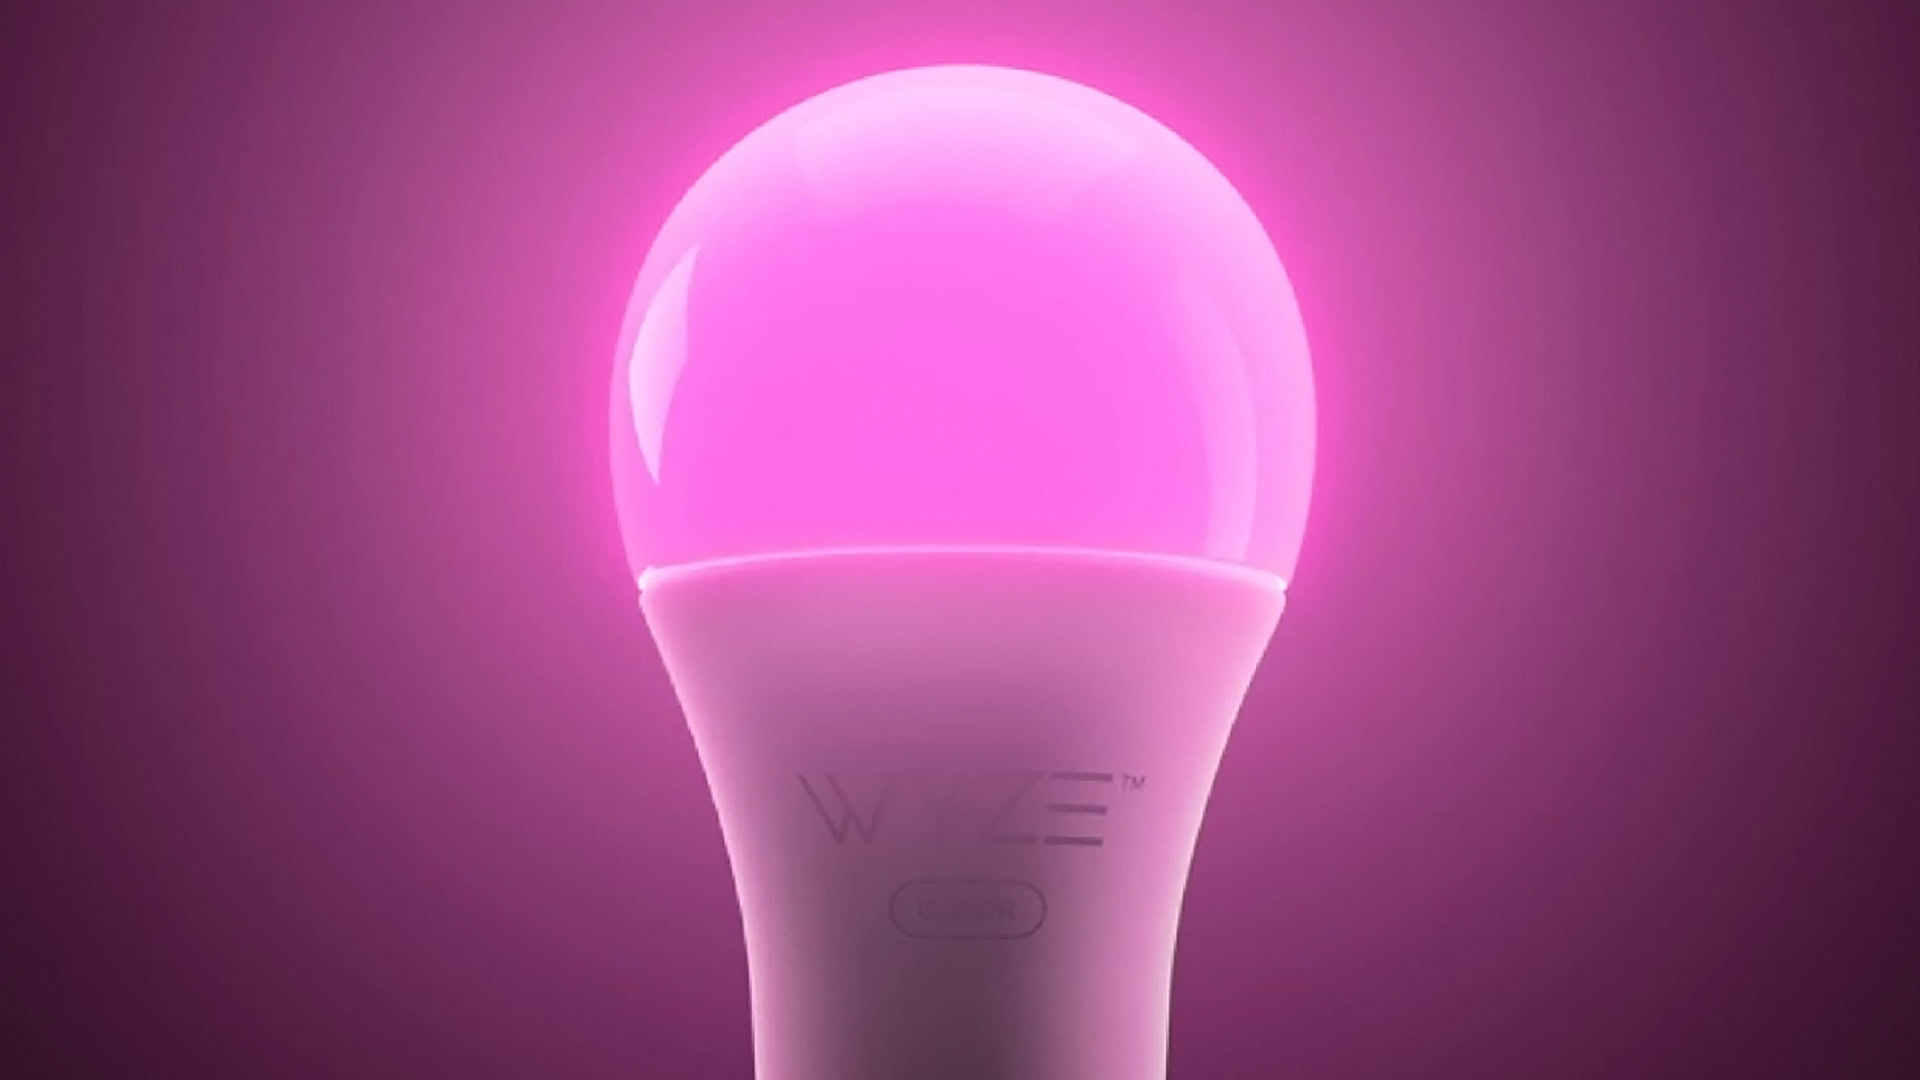 A Wyze Bulb Color glowing purple